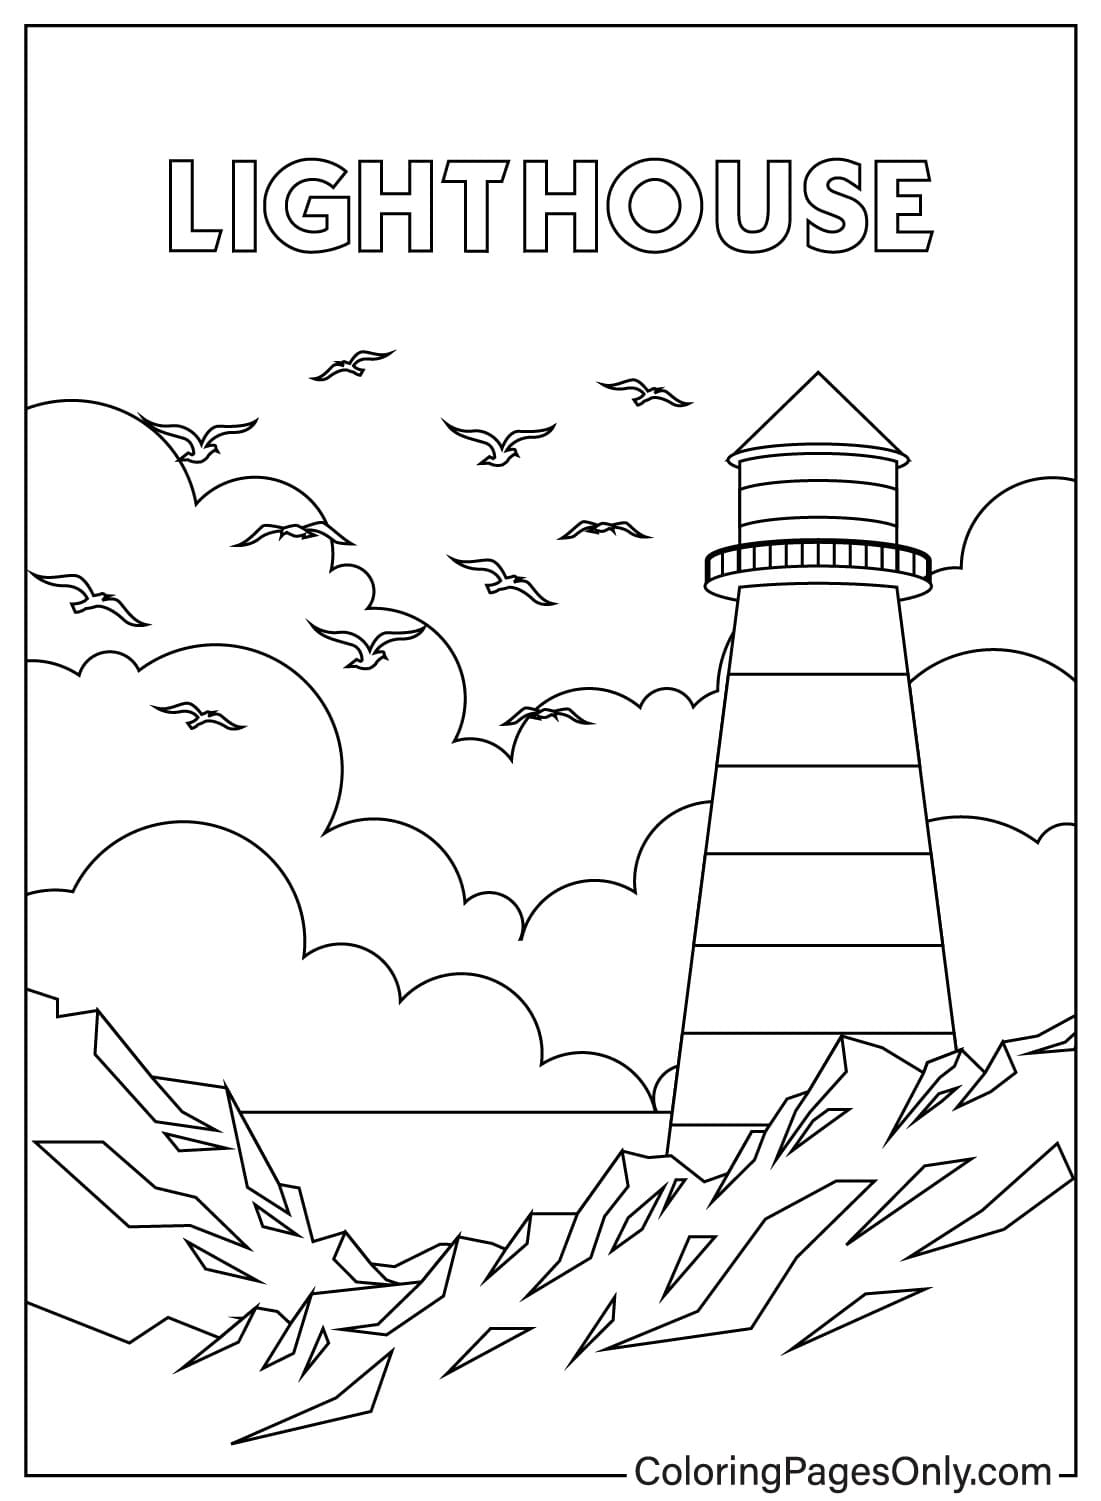 Livre de coloriage de phare de Lighthouse